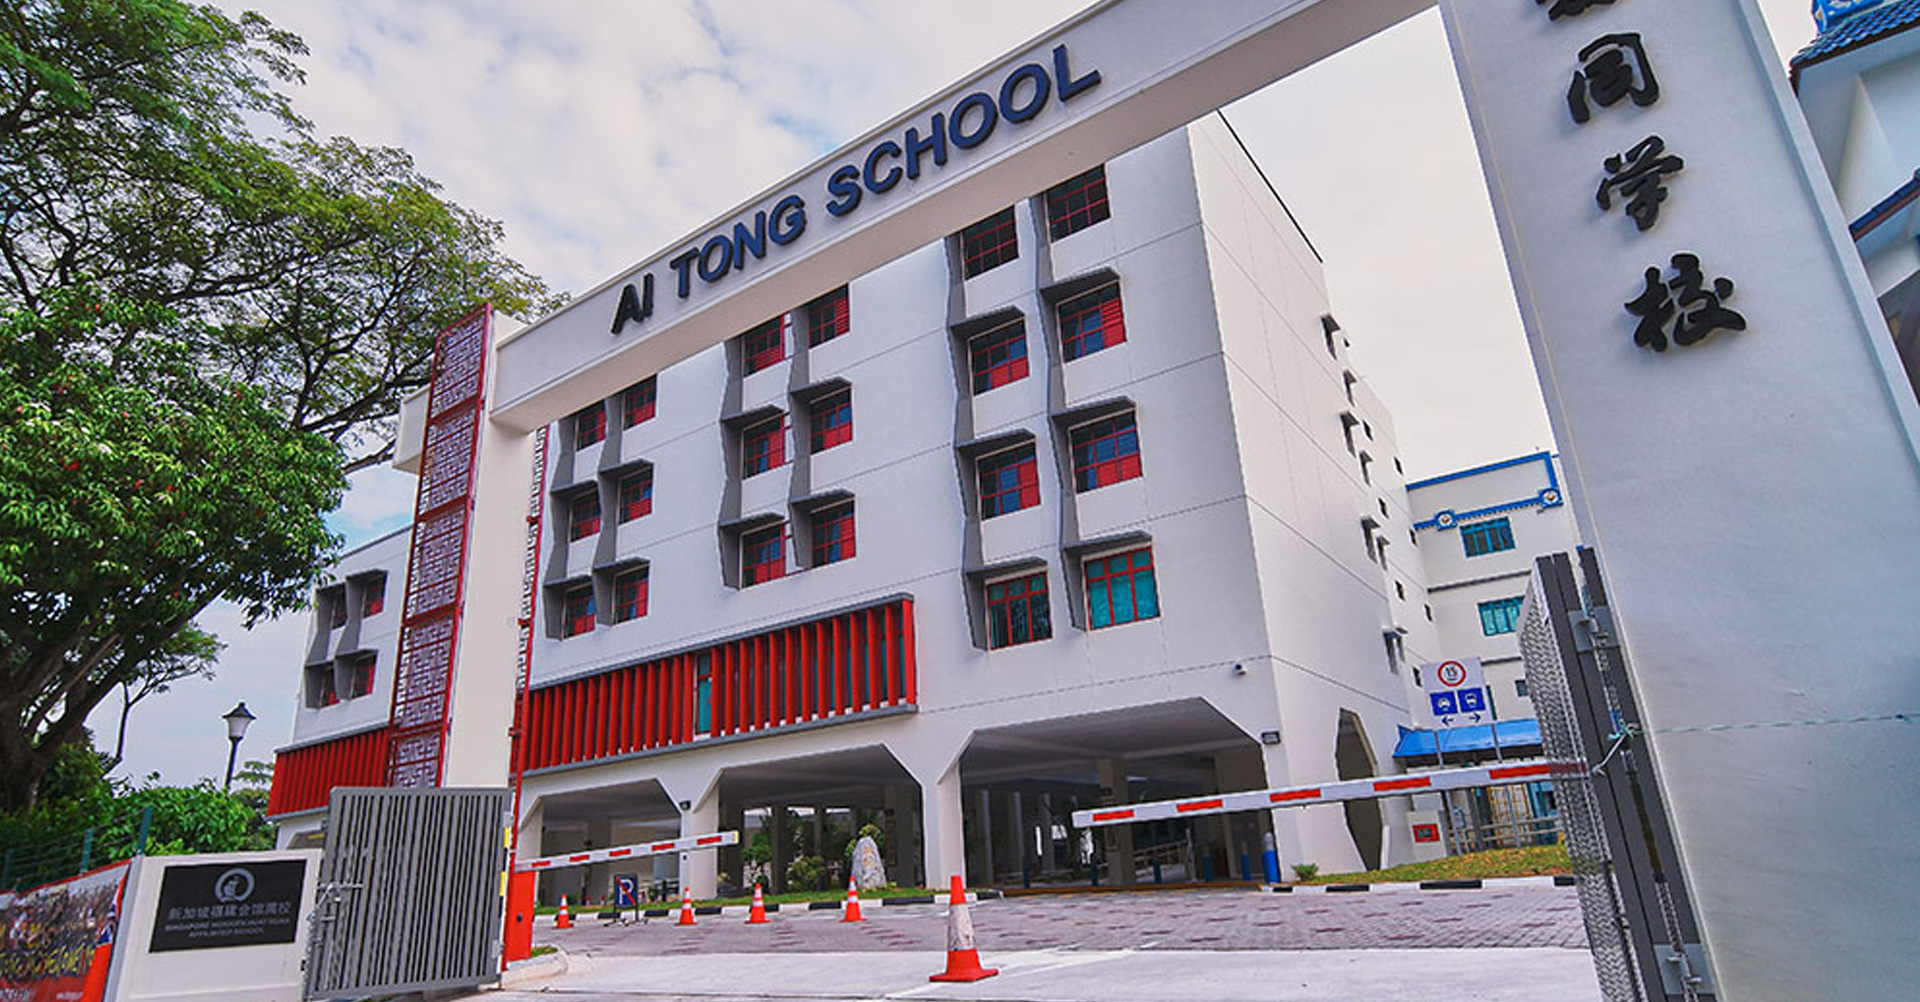 Lentor Modern close to  Ai Tong School